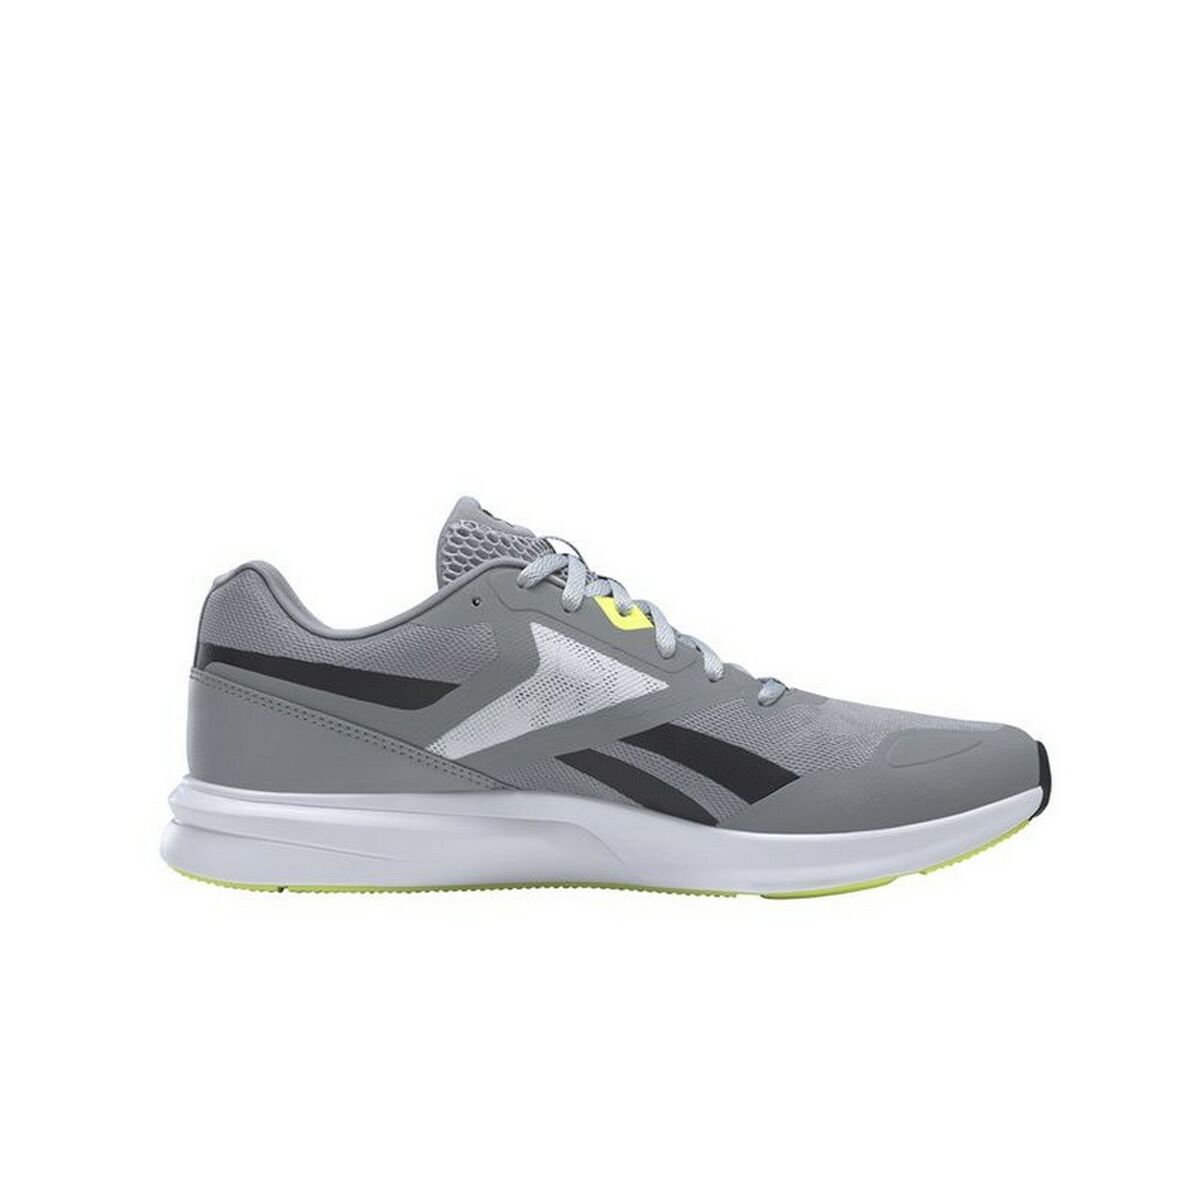 Running Shoes for Adults Reebok  Runner 4.0 Men